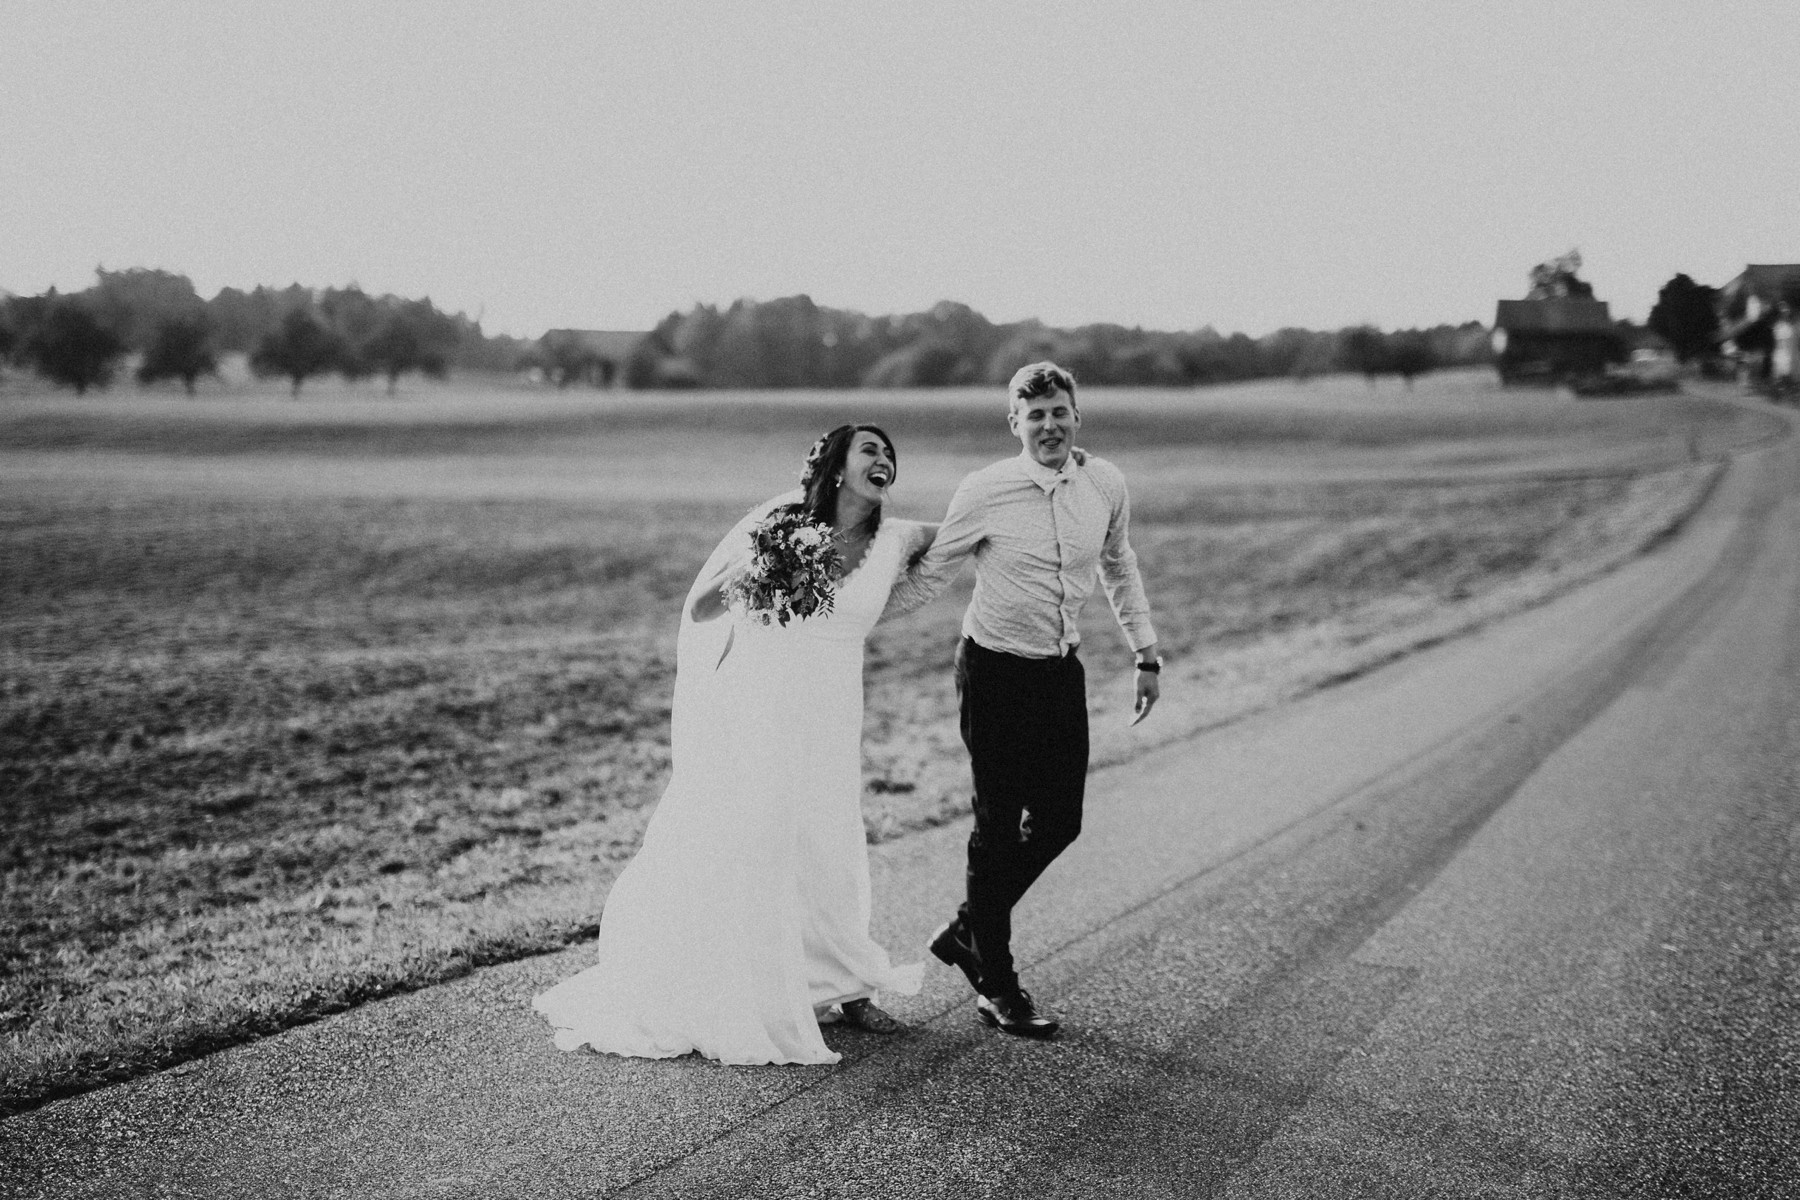 laughing wedding couple